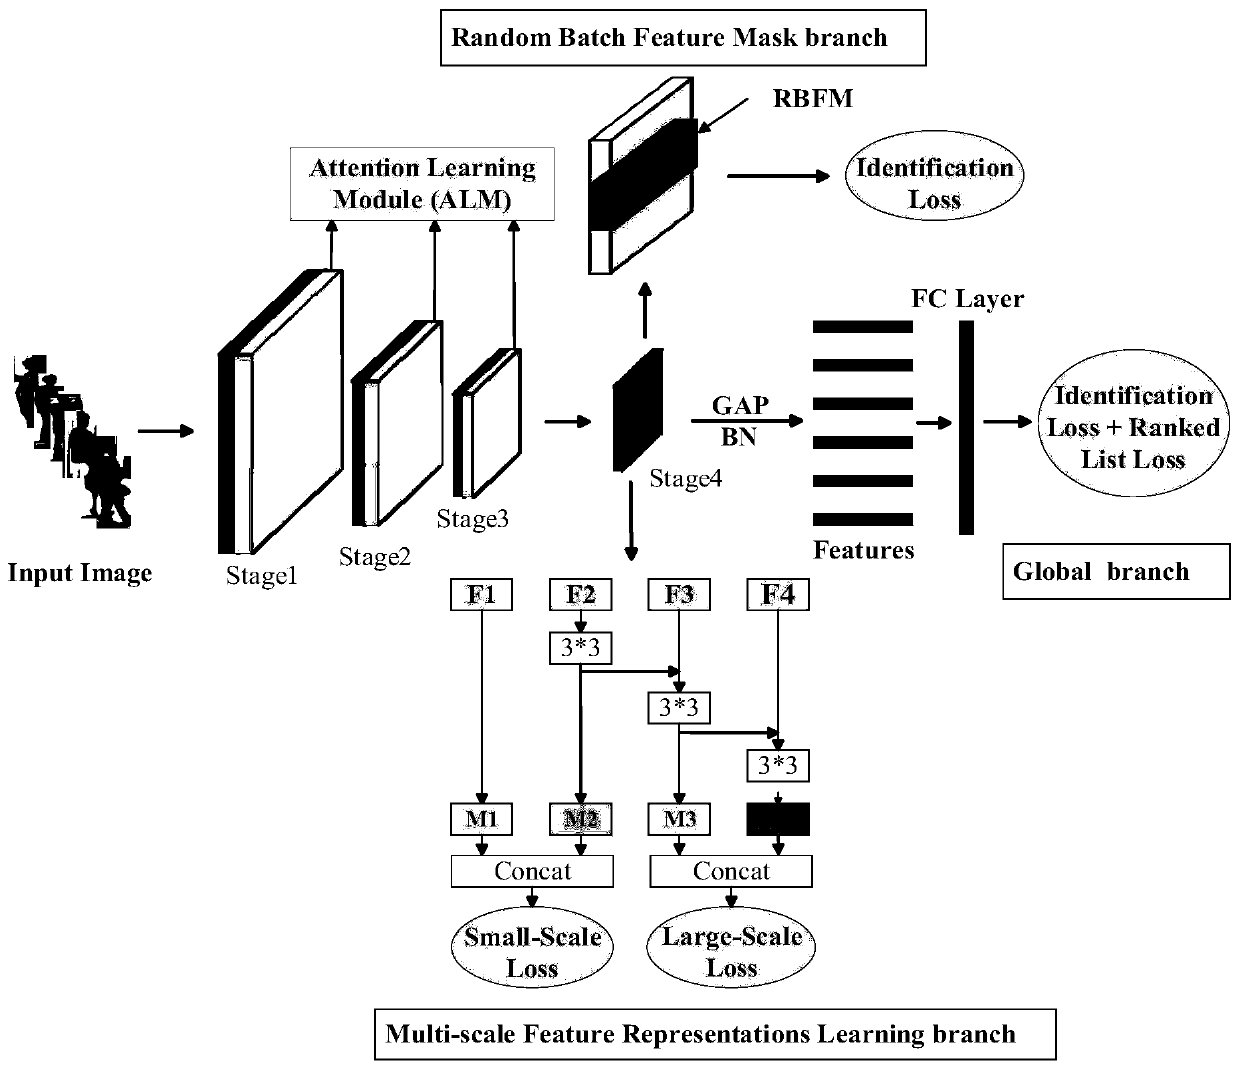 Pedestrian re-identification method fusing random batch masks and multi-scale representation learning